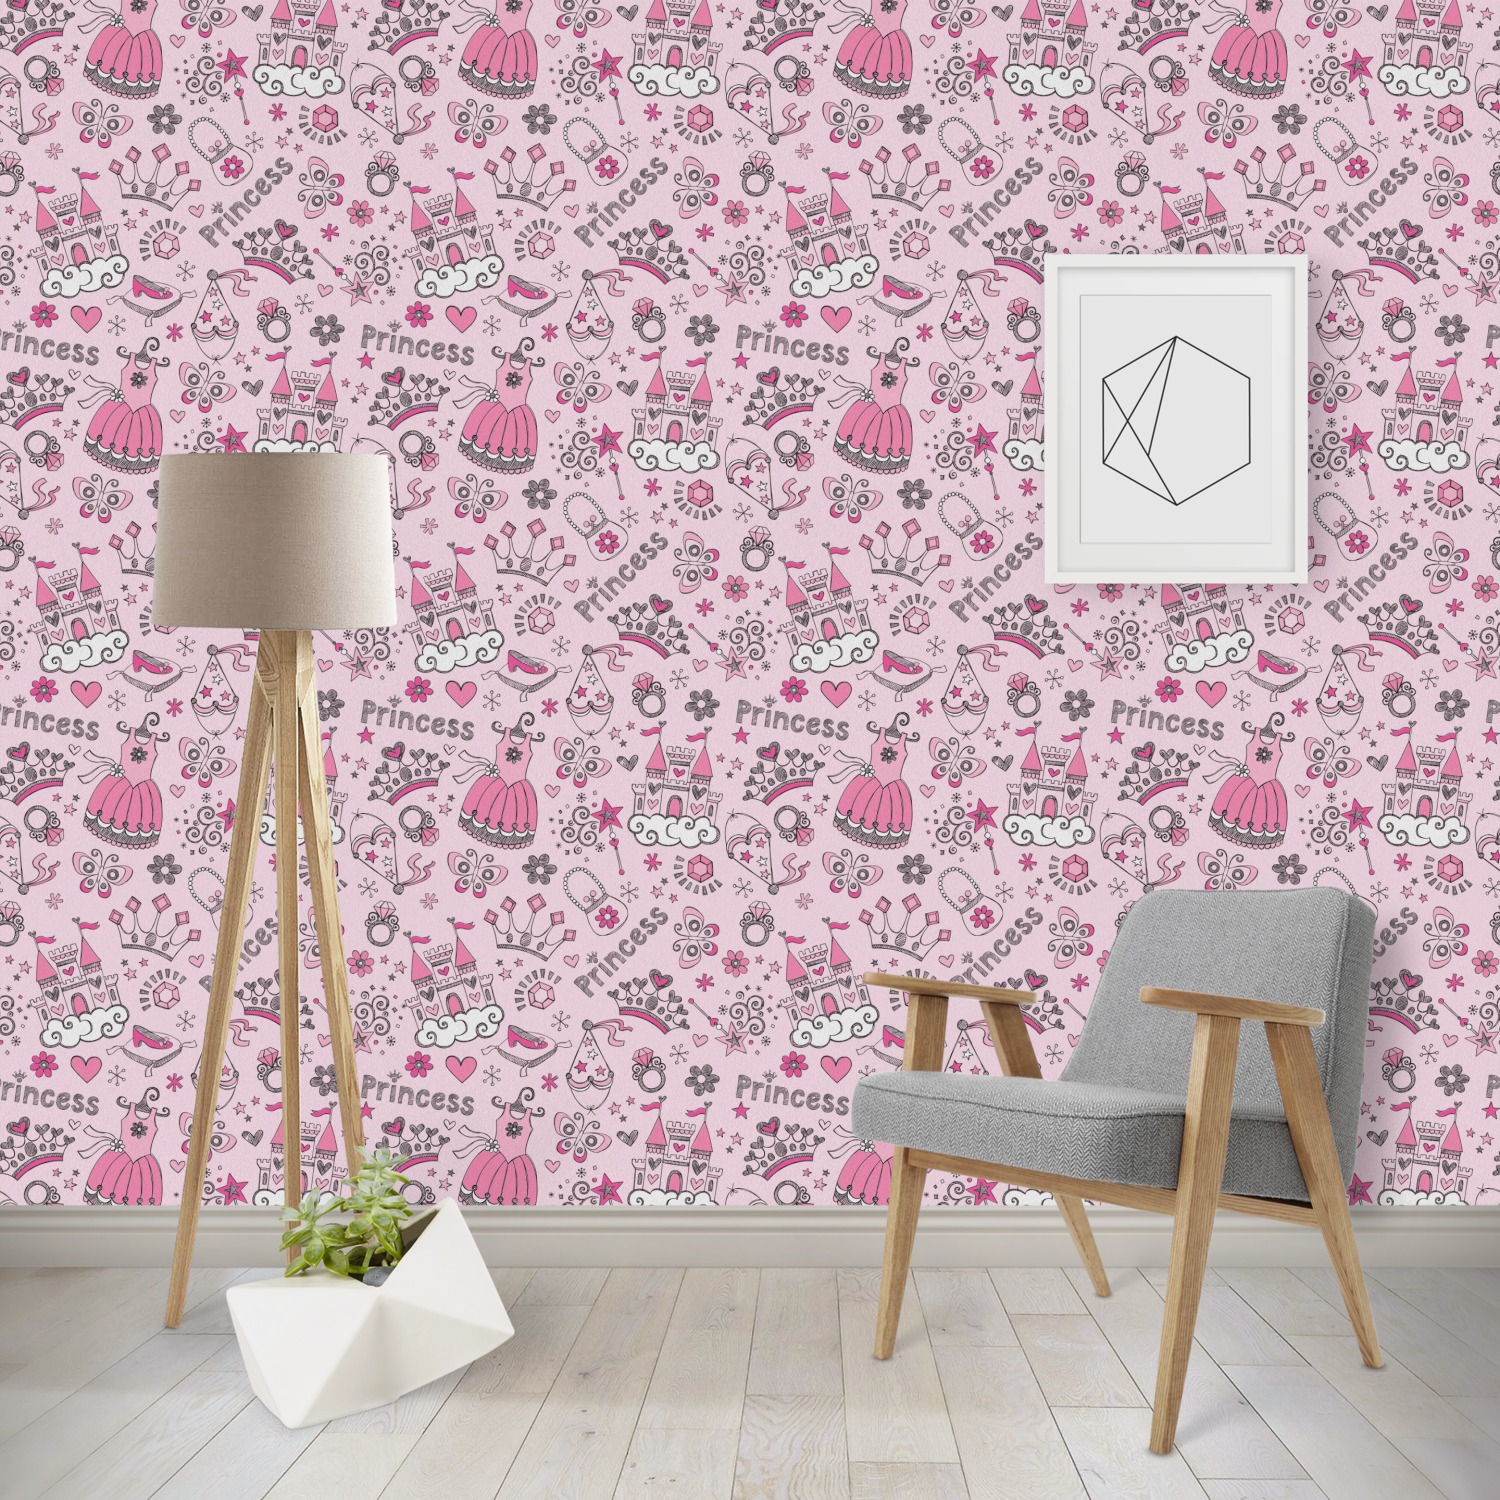 Princess Wallpaper & Surface Covering - YouCustomizeIt